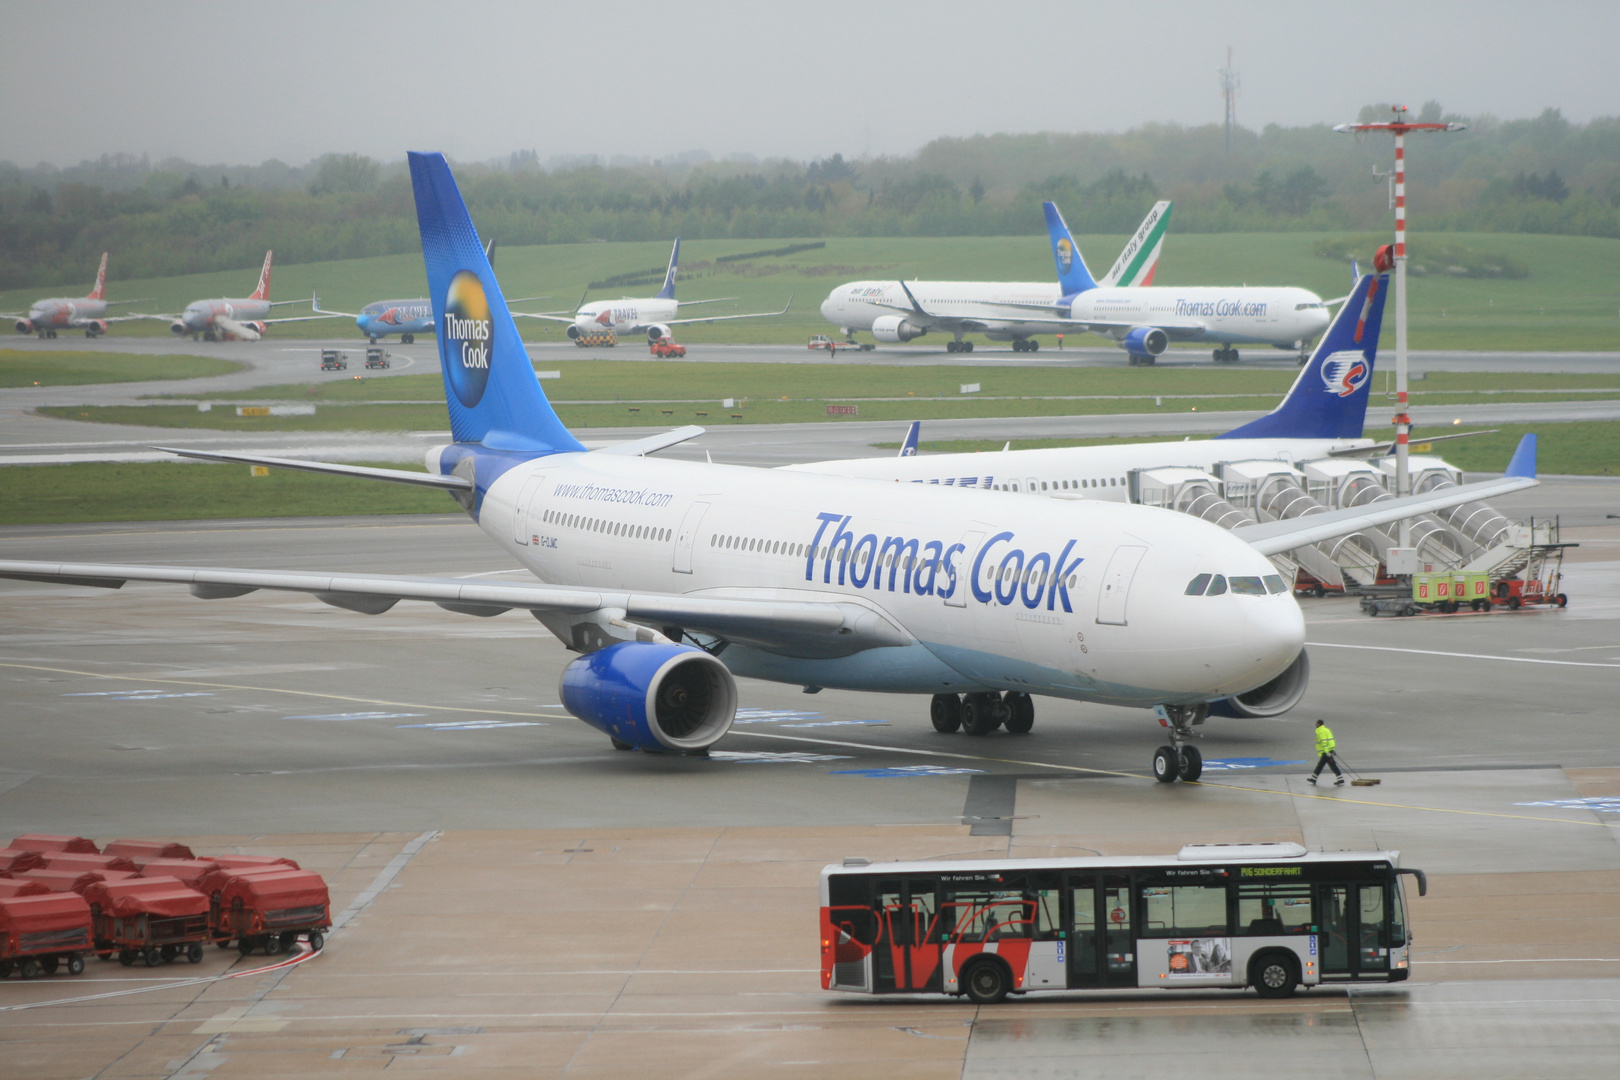 Größenvergleich Thomas Cook A330-200 und "Citaro" (Bus) / Comparación del tamaño entre A332 + Bus